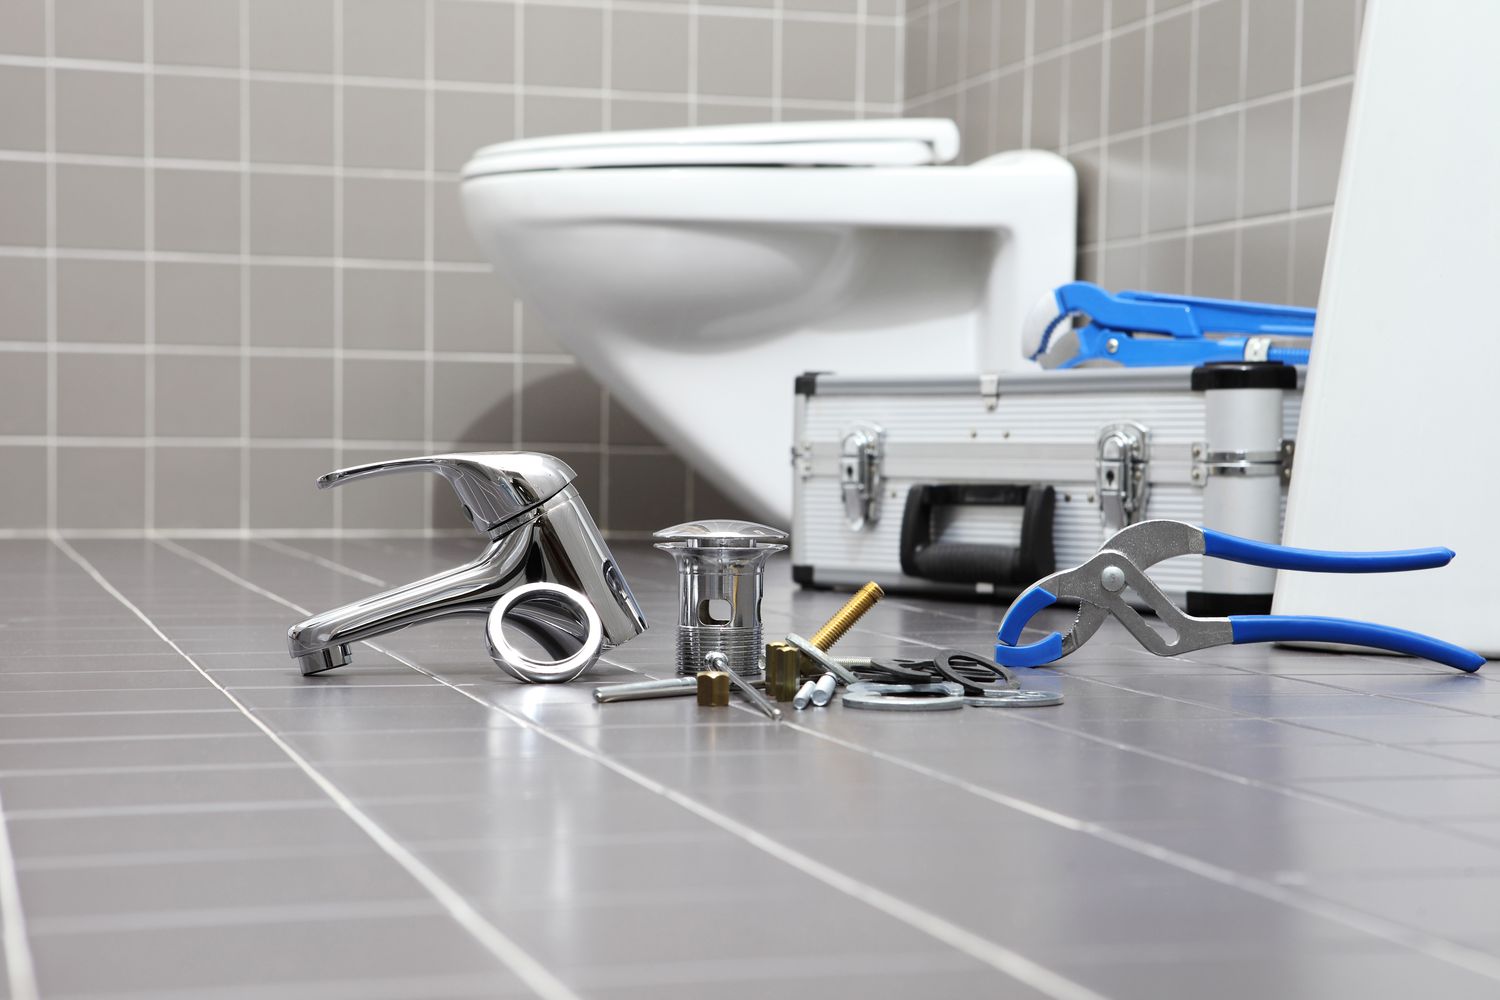 plumber-tools-and-equipment-in-a-bathroom--plumbing-repair-service--assemble-and-install-concept-914972980-0fe9cab0e1a04a3089235dc3666a7ec3